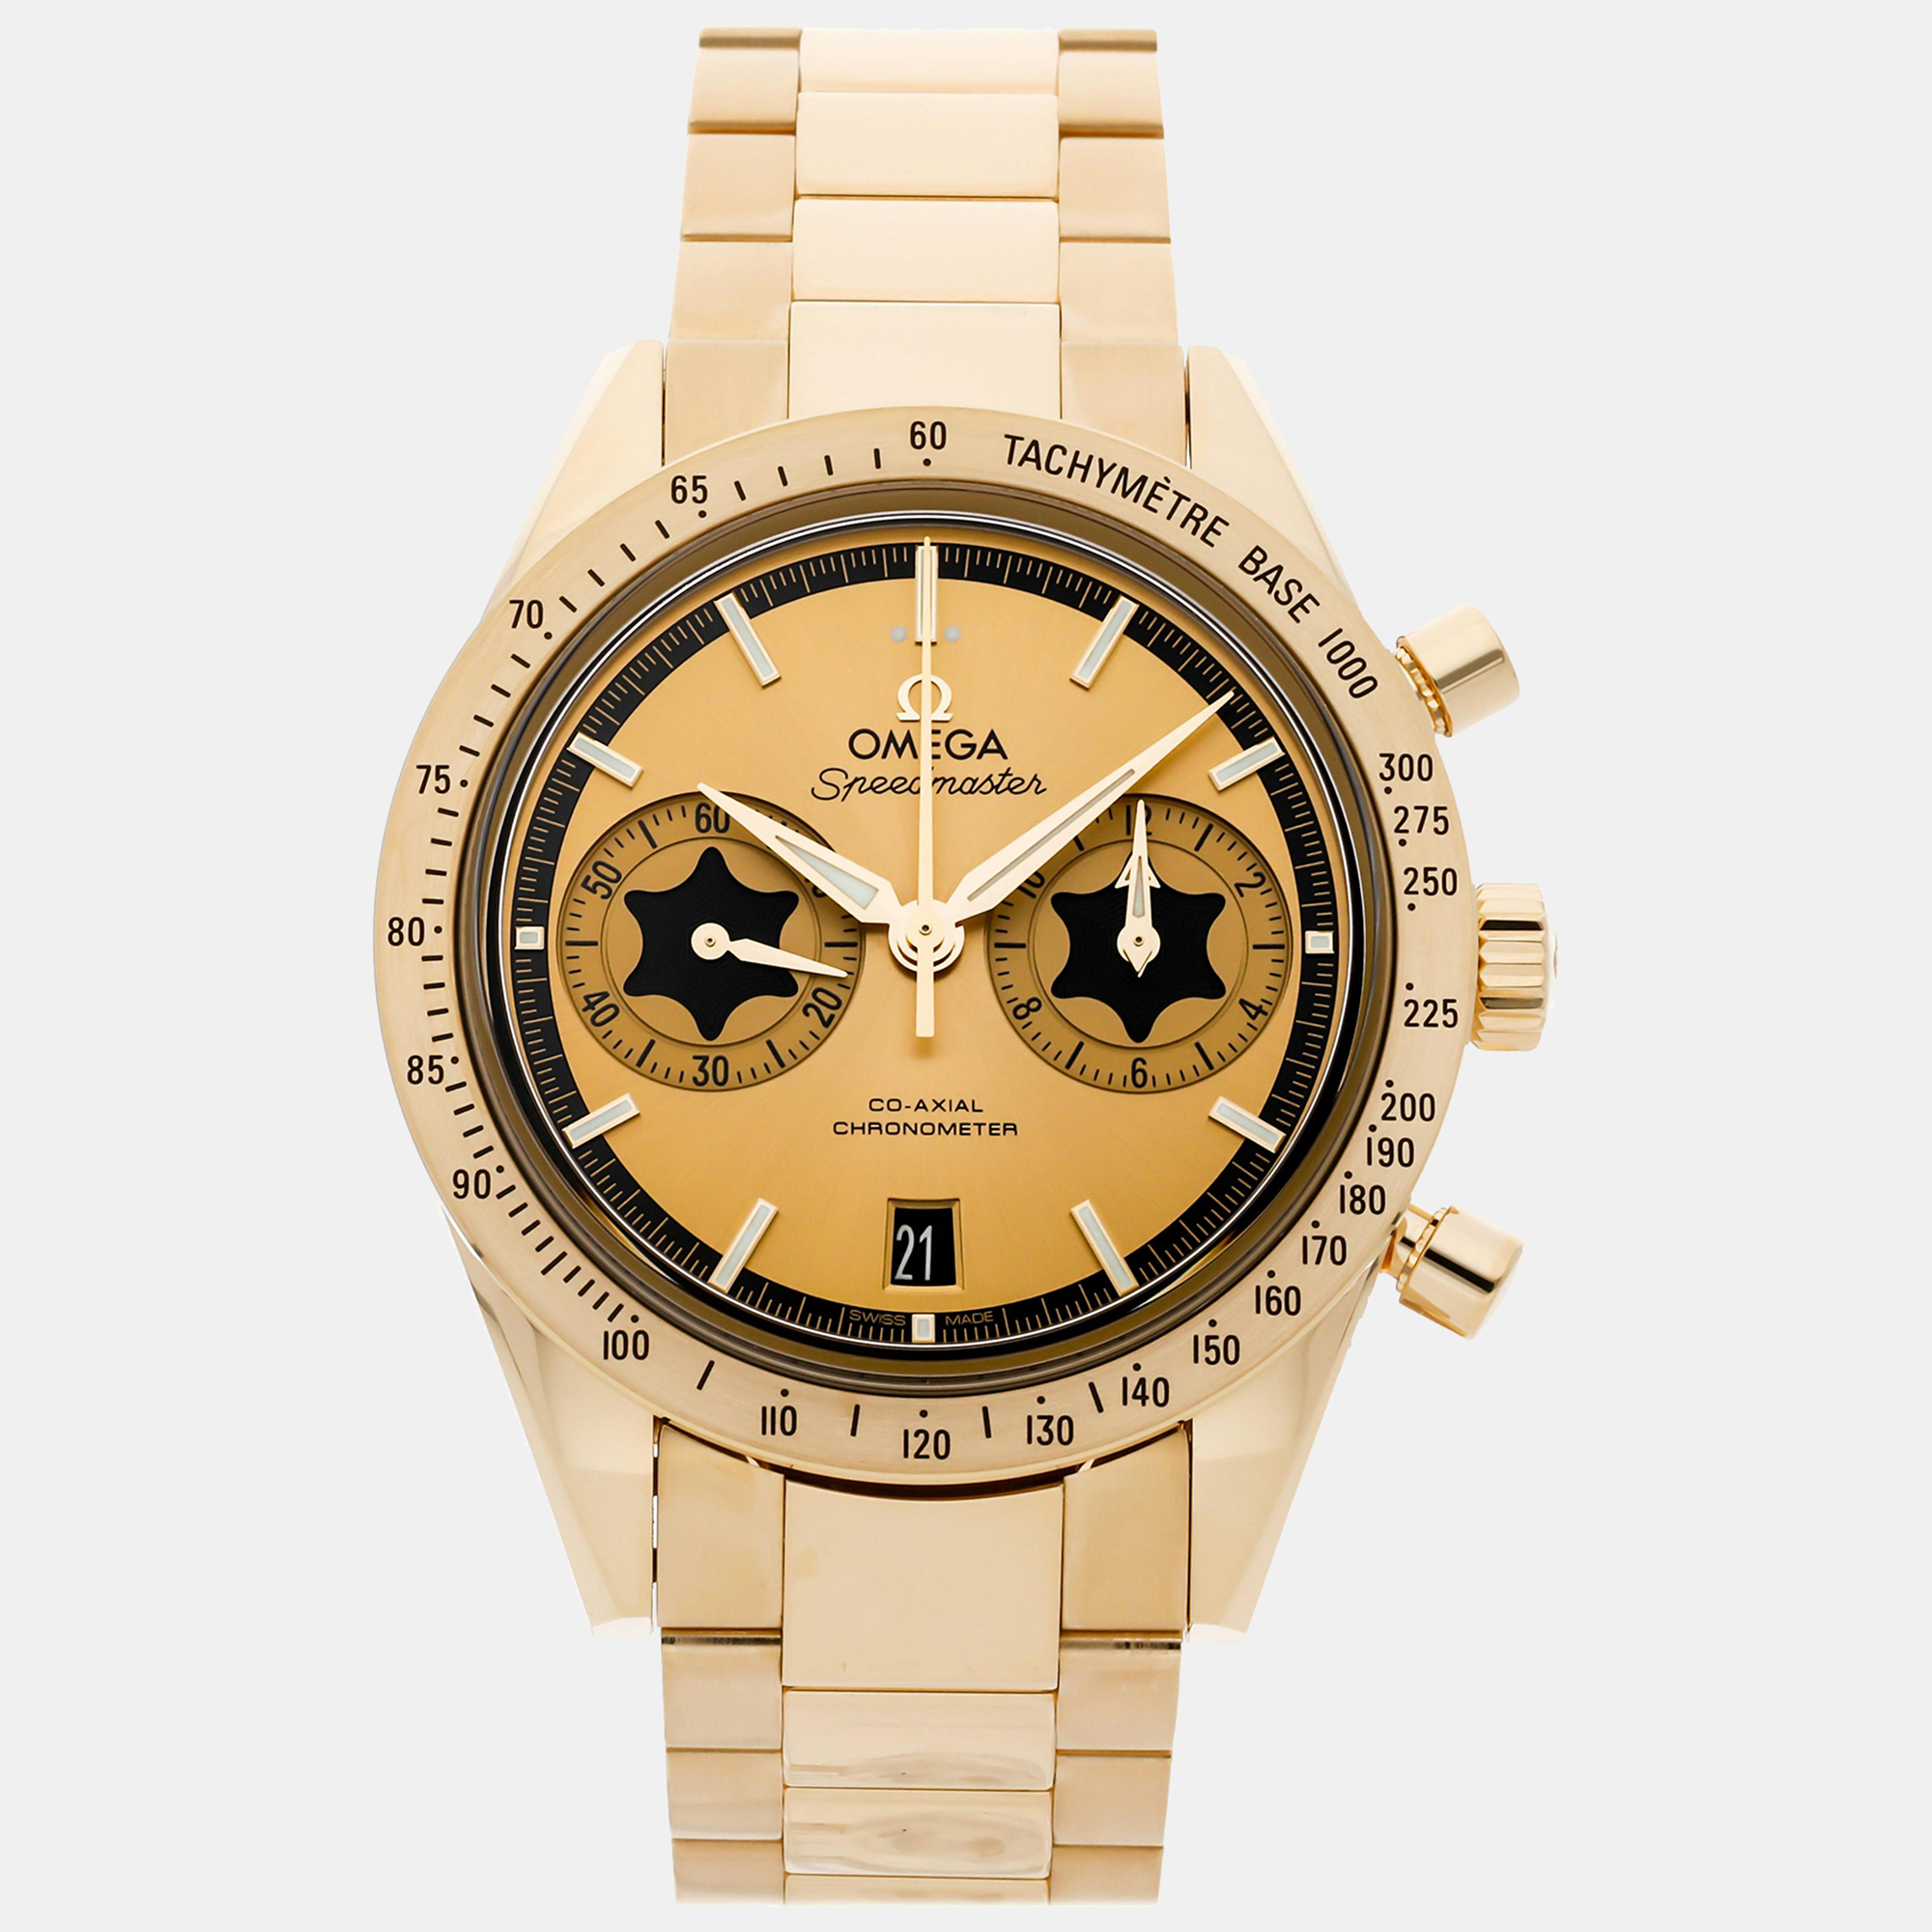 Omega champagne 18k yellow gold speedmaster 331.50.42.51.08.001 automatic men's wristwatch 41 mm